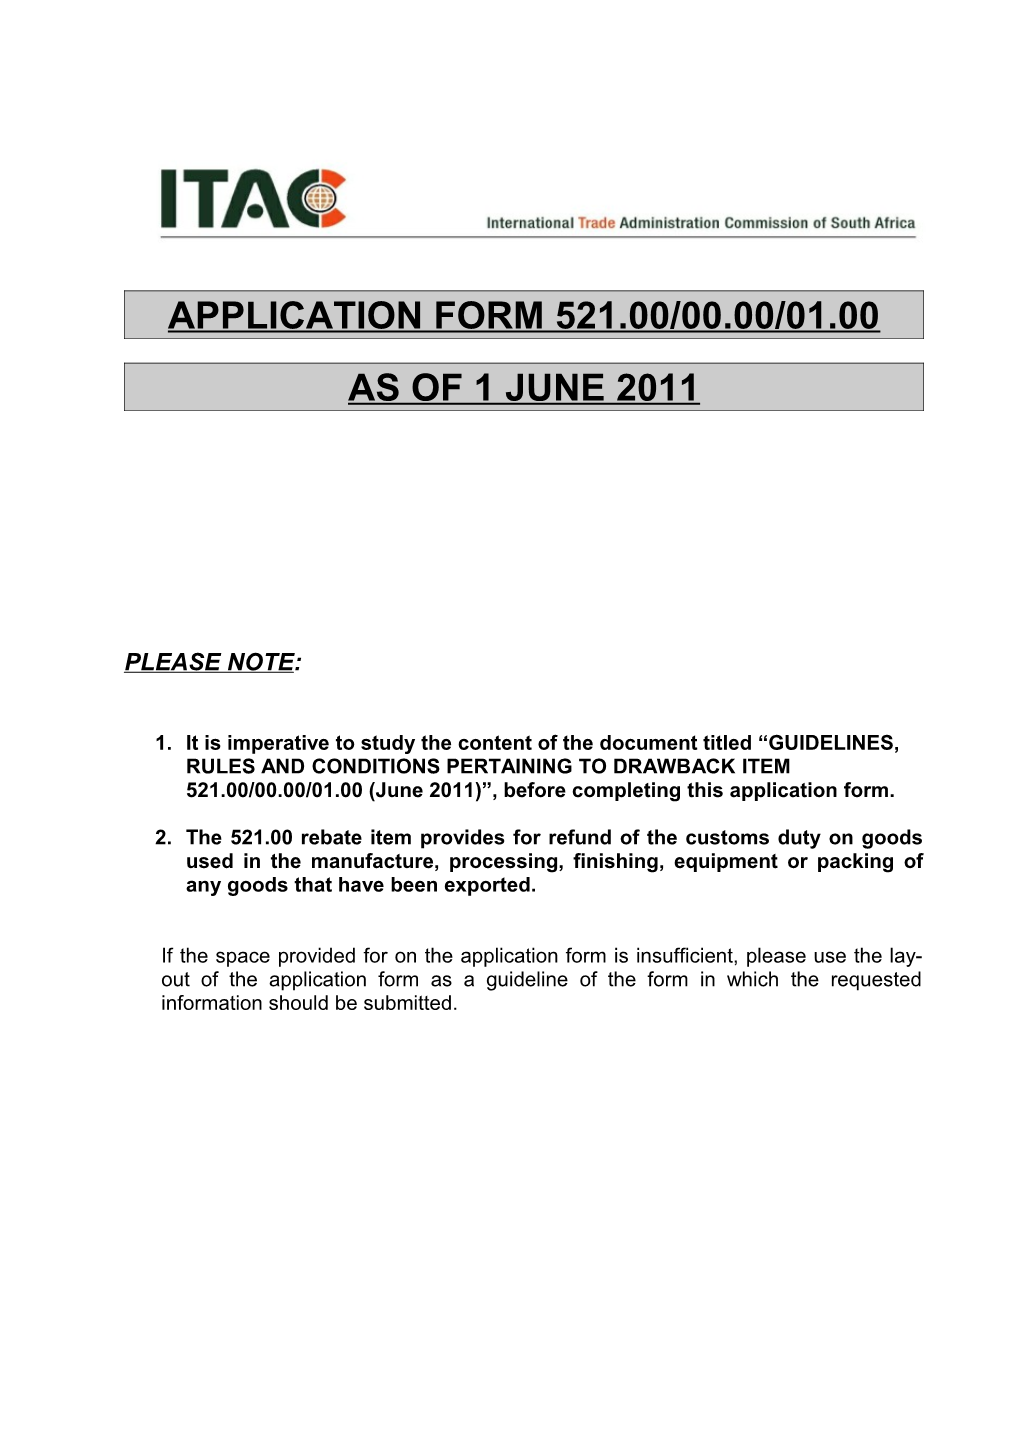 Application Form 521.00/00.00/01.00